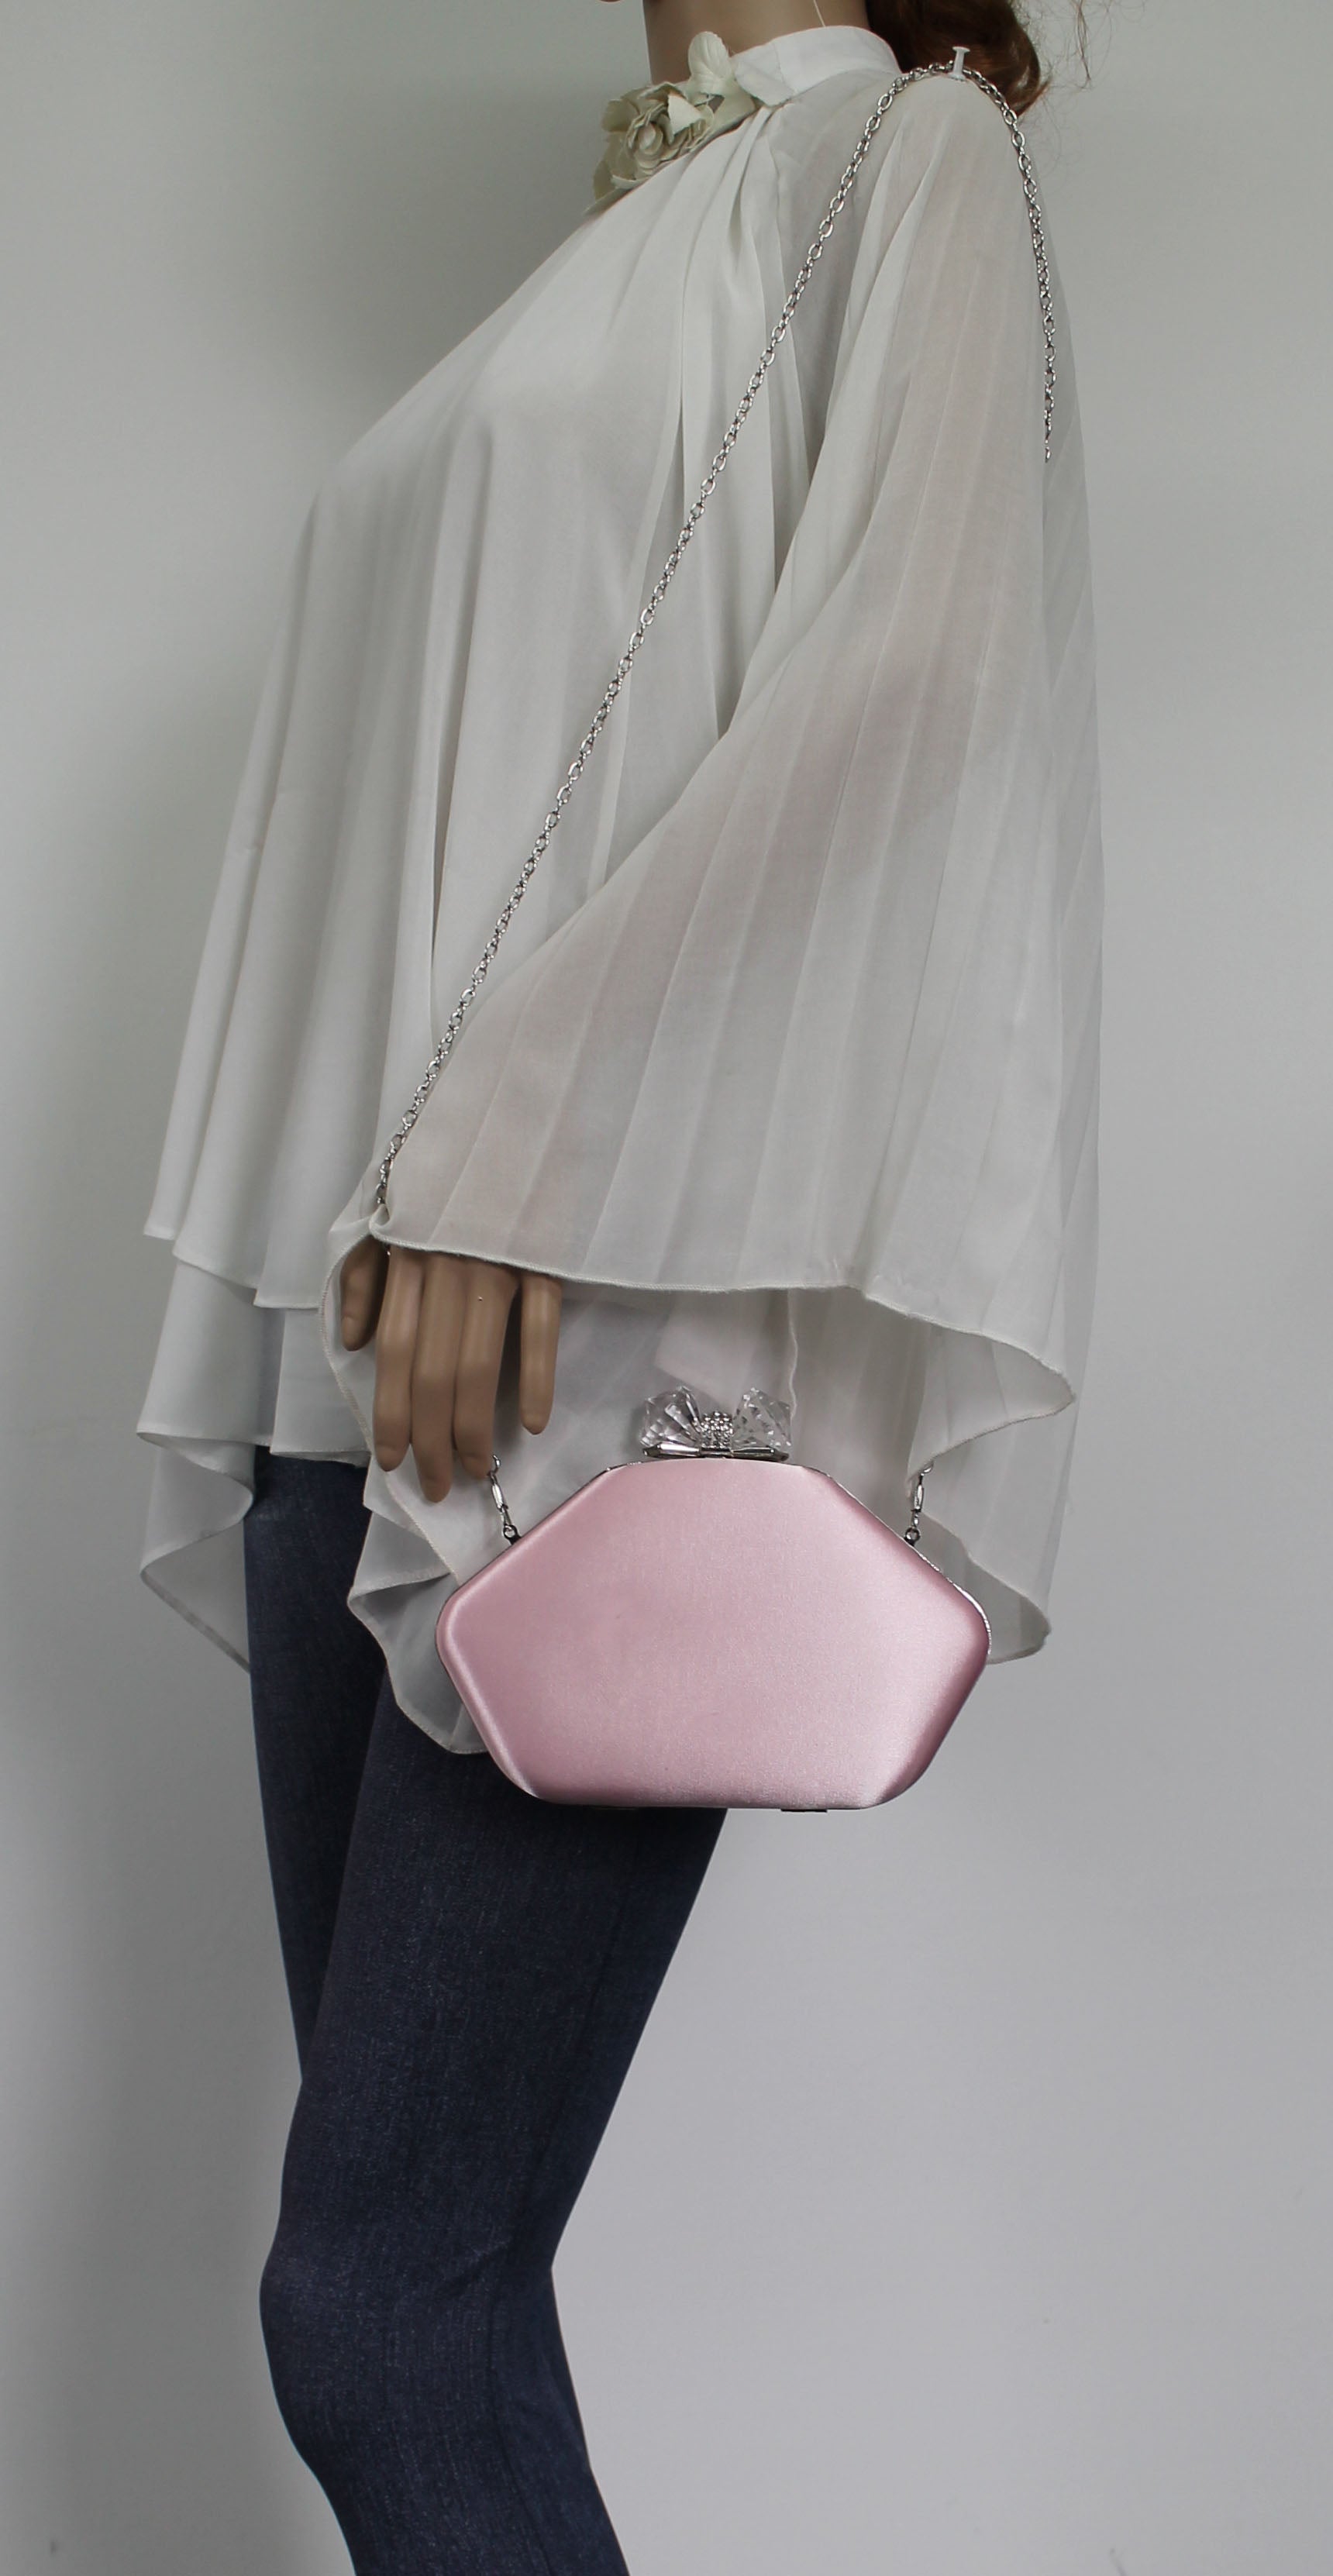 SWANKYSWANS Karie Clutch Bag Pink Cute Cheap Clutch Bag For Weddings School and Work